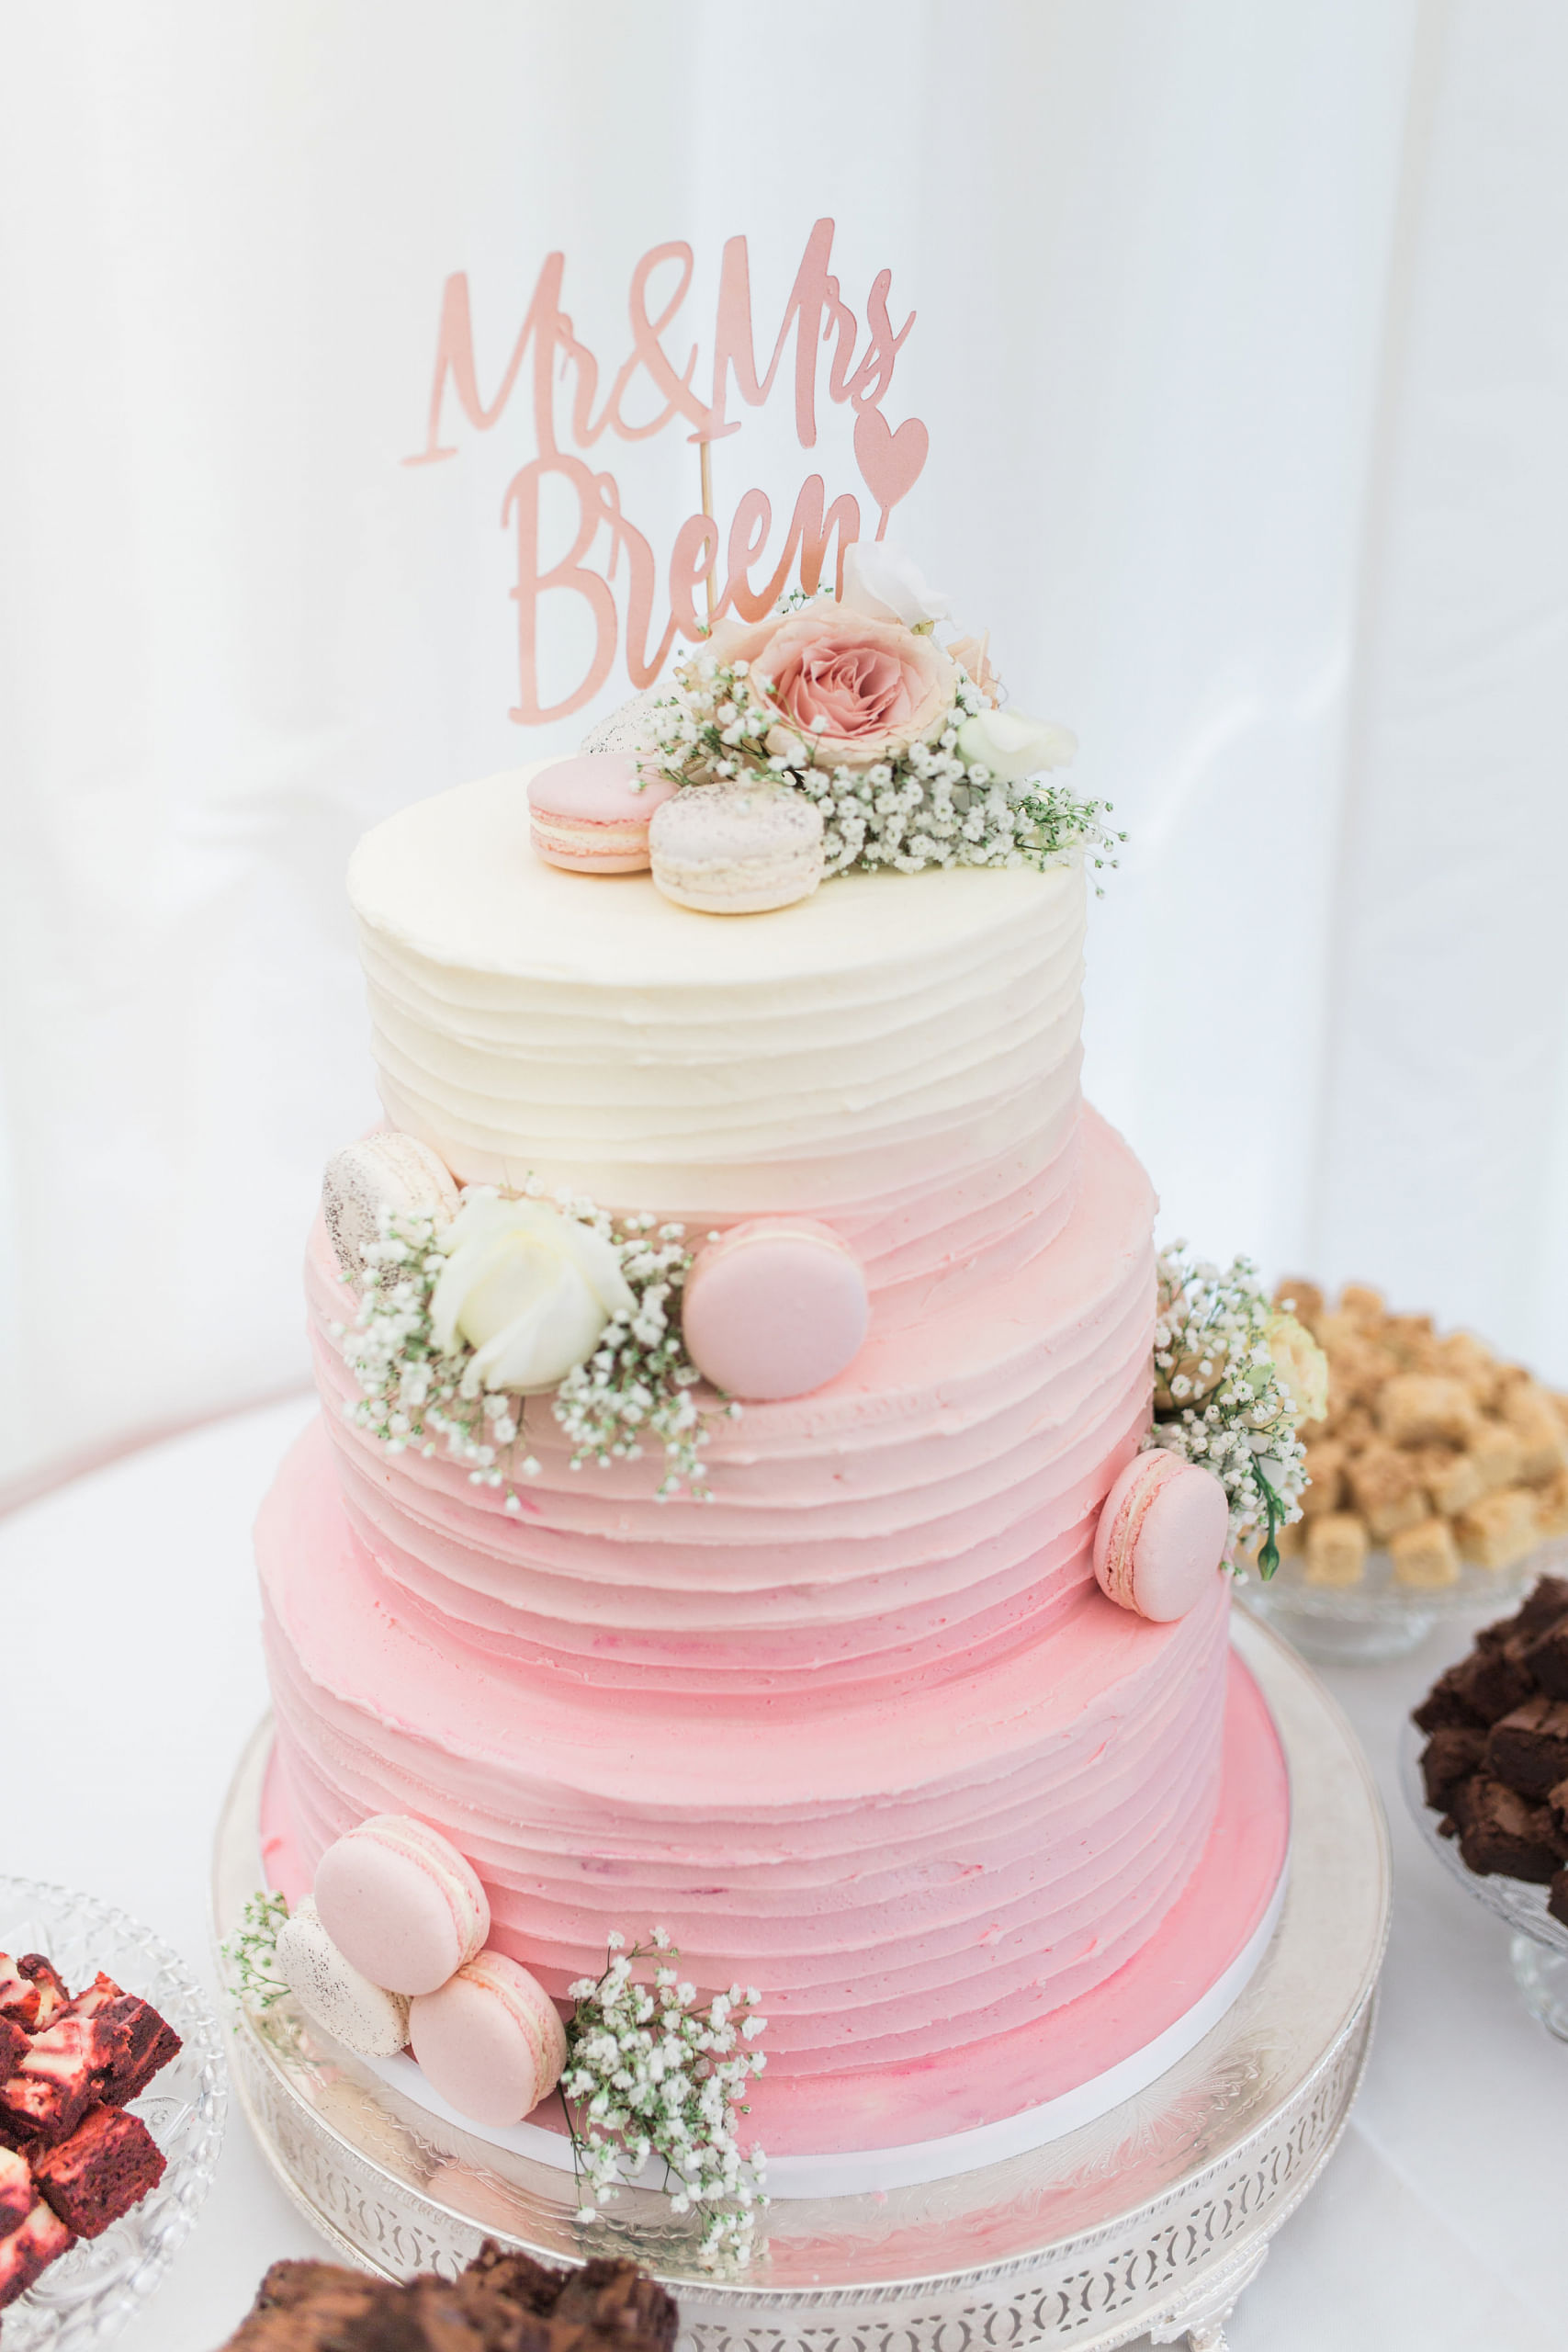 Top 10 Wedding Cake Designs Ideas - Weva Photography